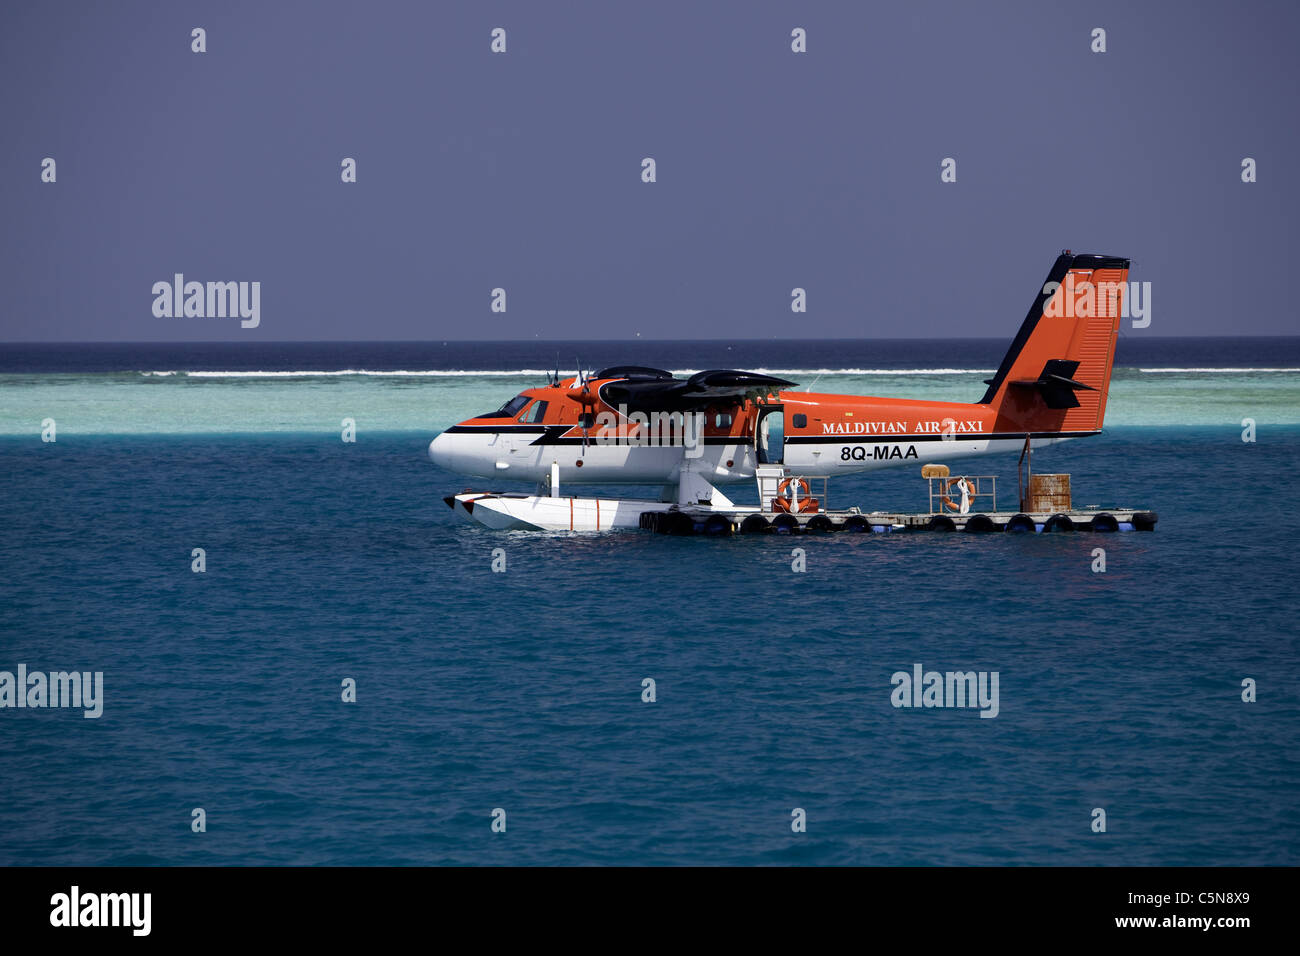 Maledivian Air Taxi, Indian Ocean, Maldives Stock Photo